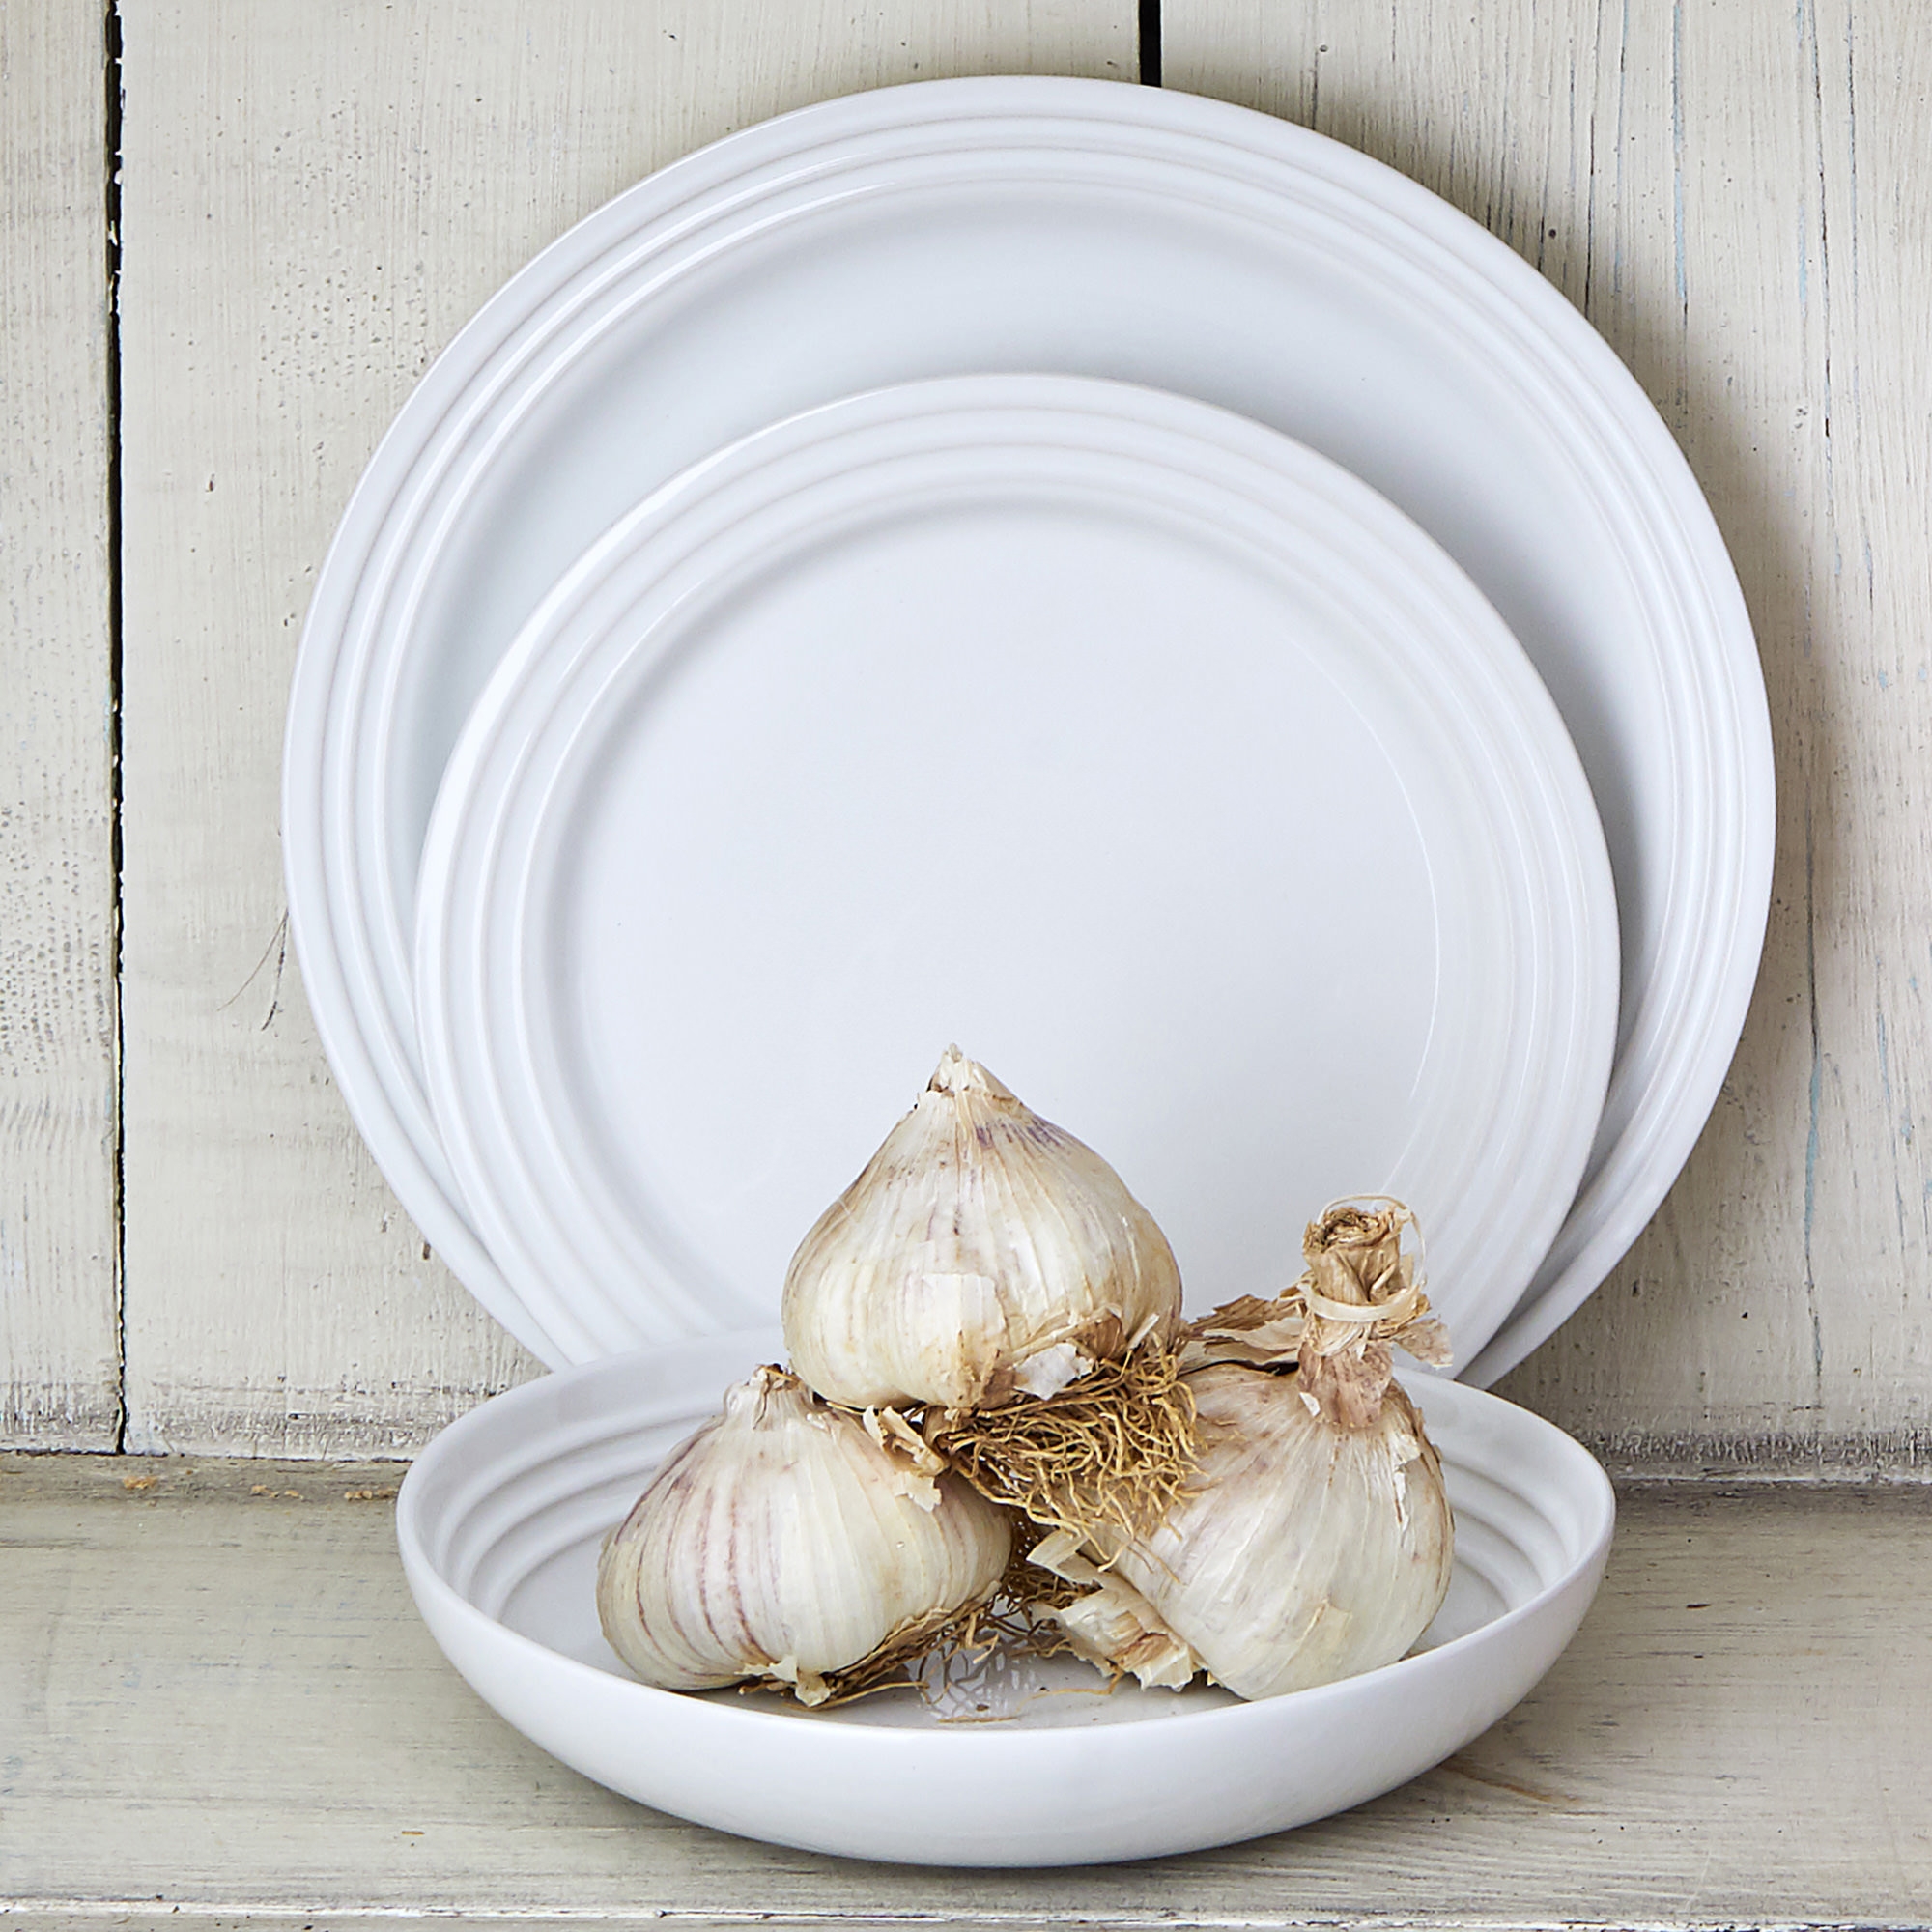 Le Creuset Stoneware Dinner Plate Set of 4 White Image 2